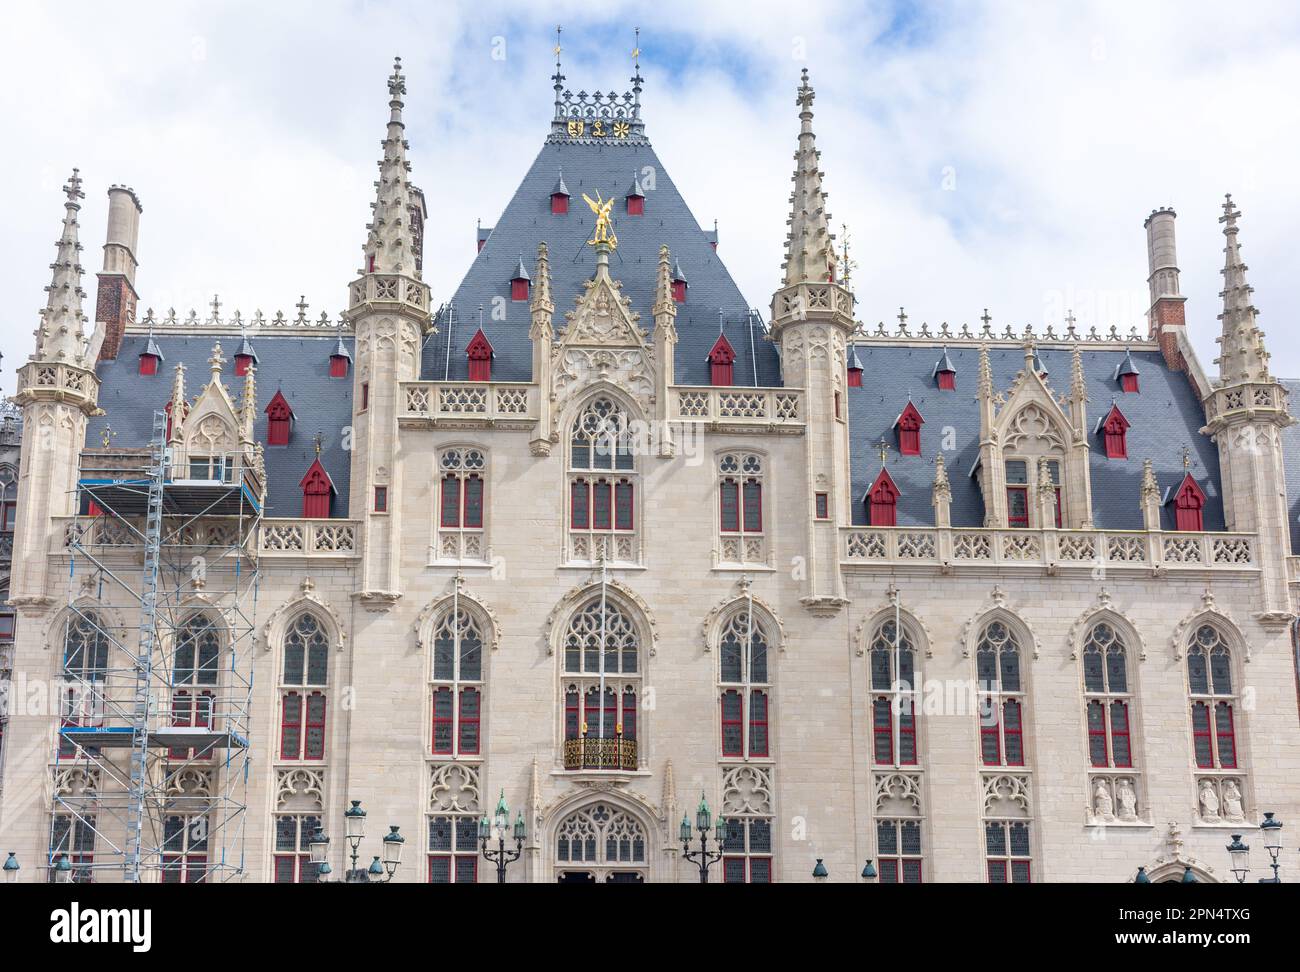 Provinciaal Hof (Cour provinciale), Markt, Brugge (Bruges), province de Flandre Occidentale, région flamande, Belgique Banque D'Images